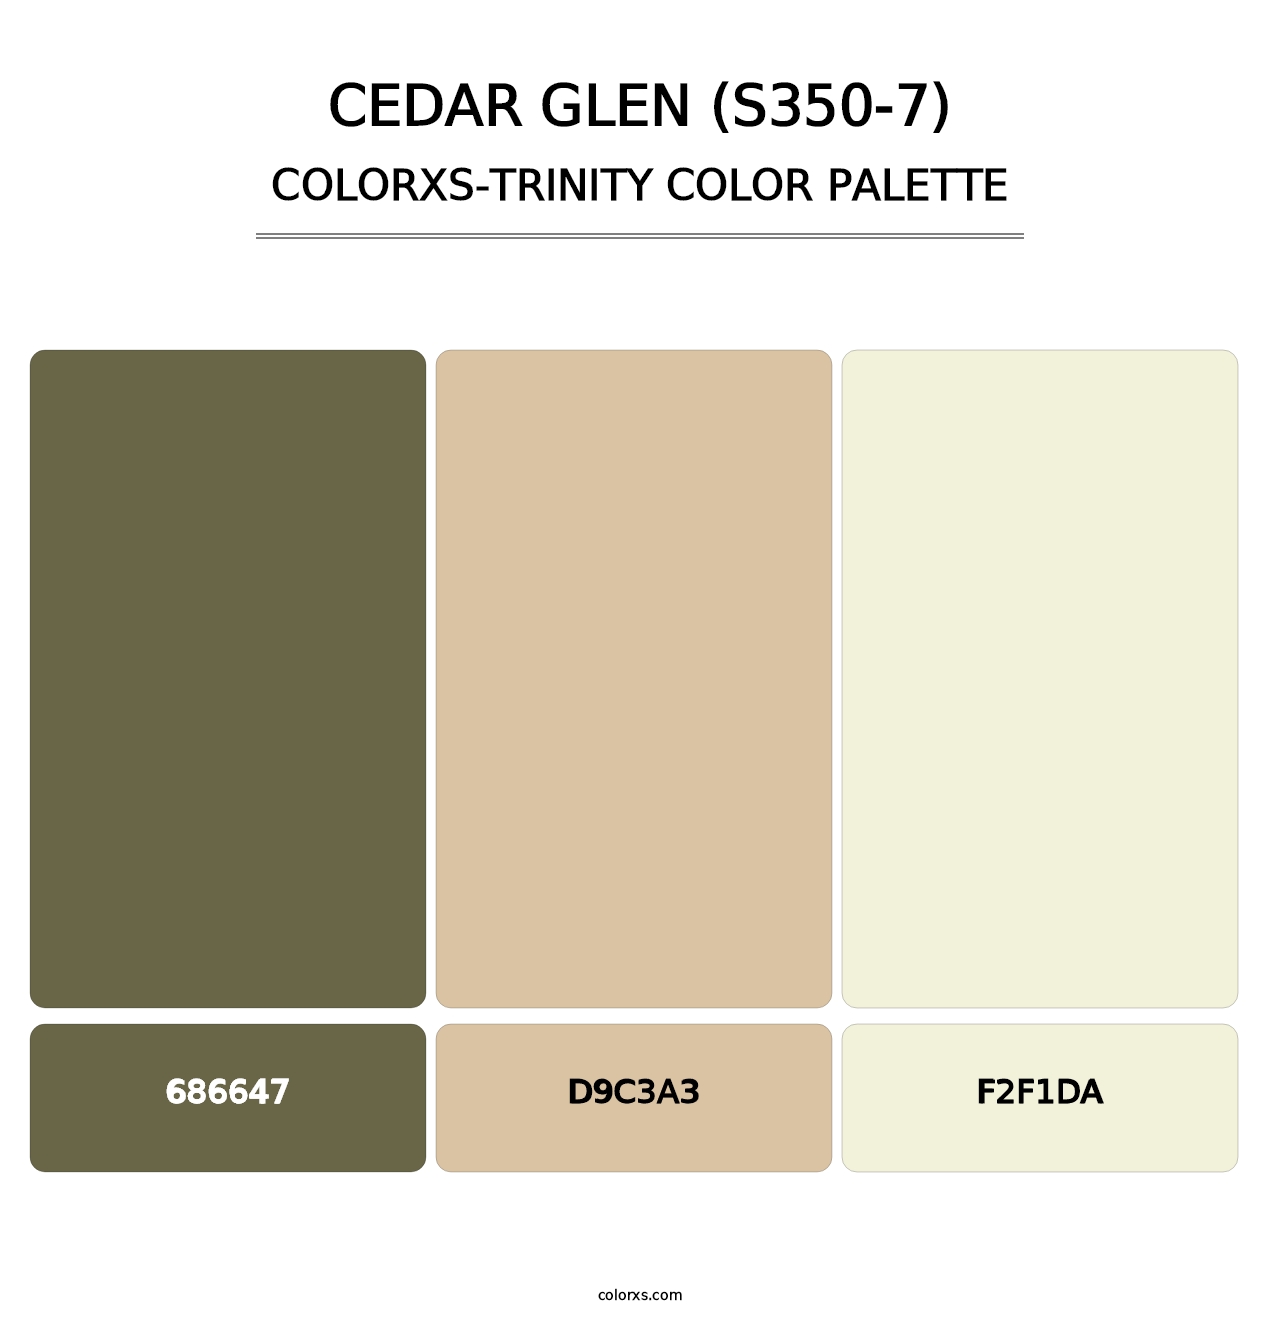 Cedar Glen (S350-7) - Colorxs Trinity Palette